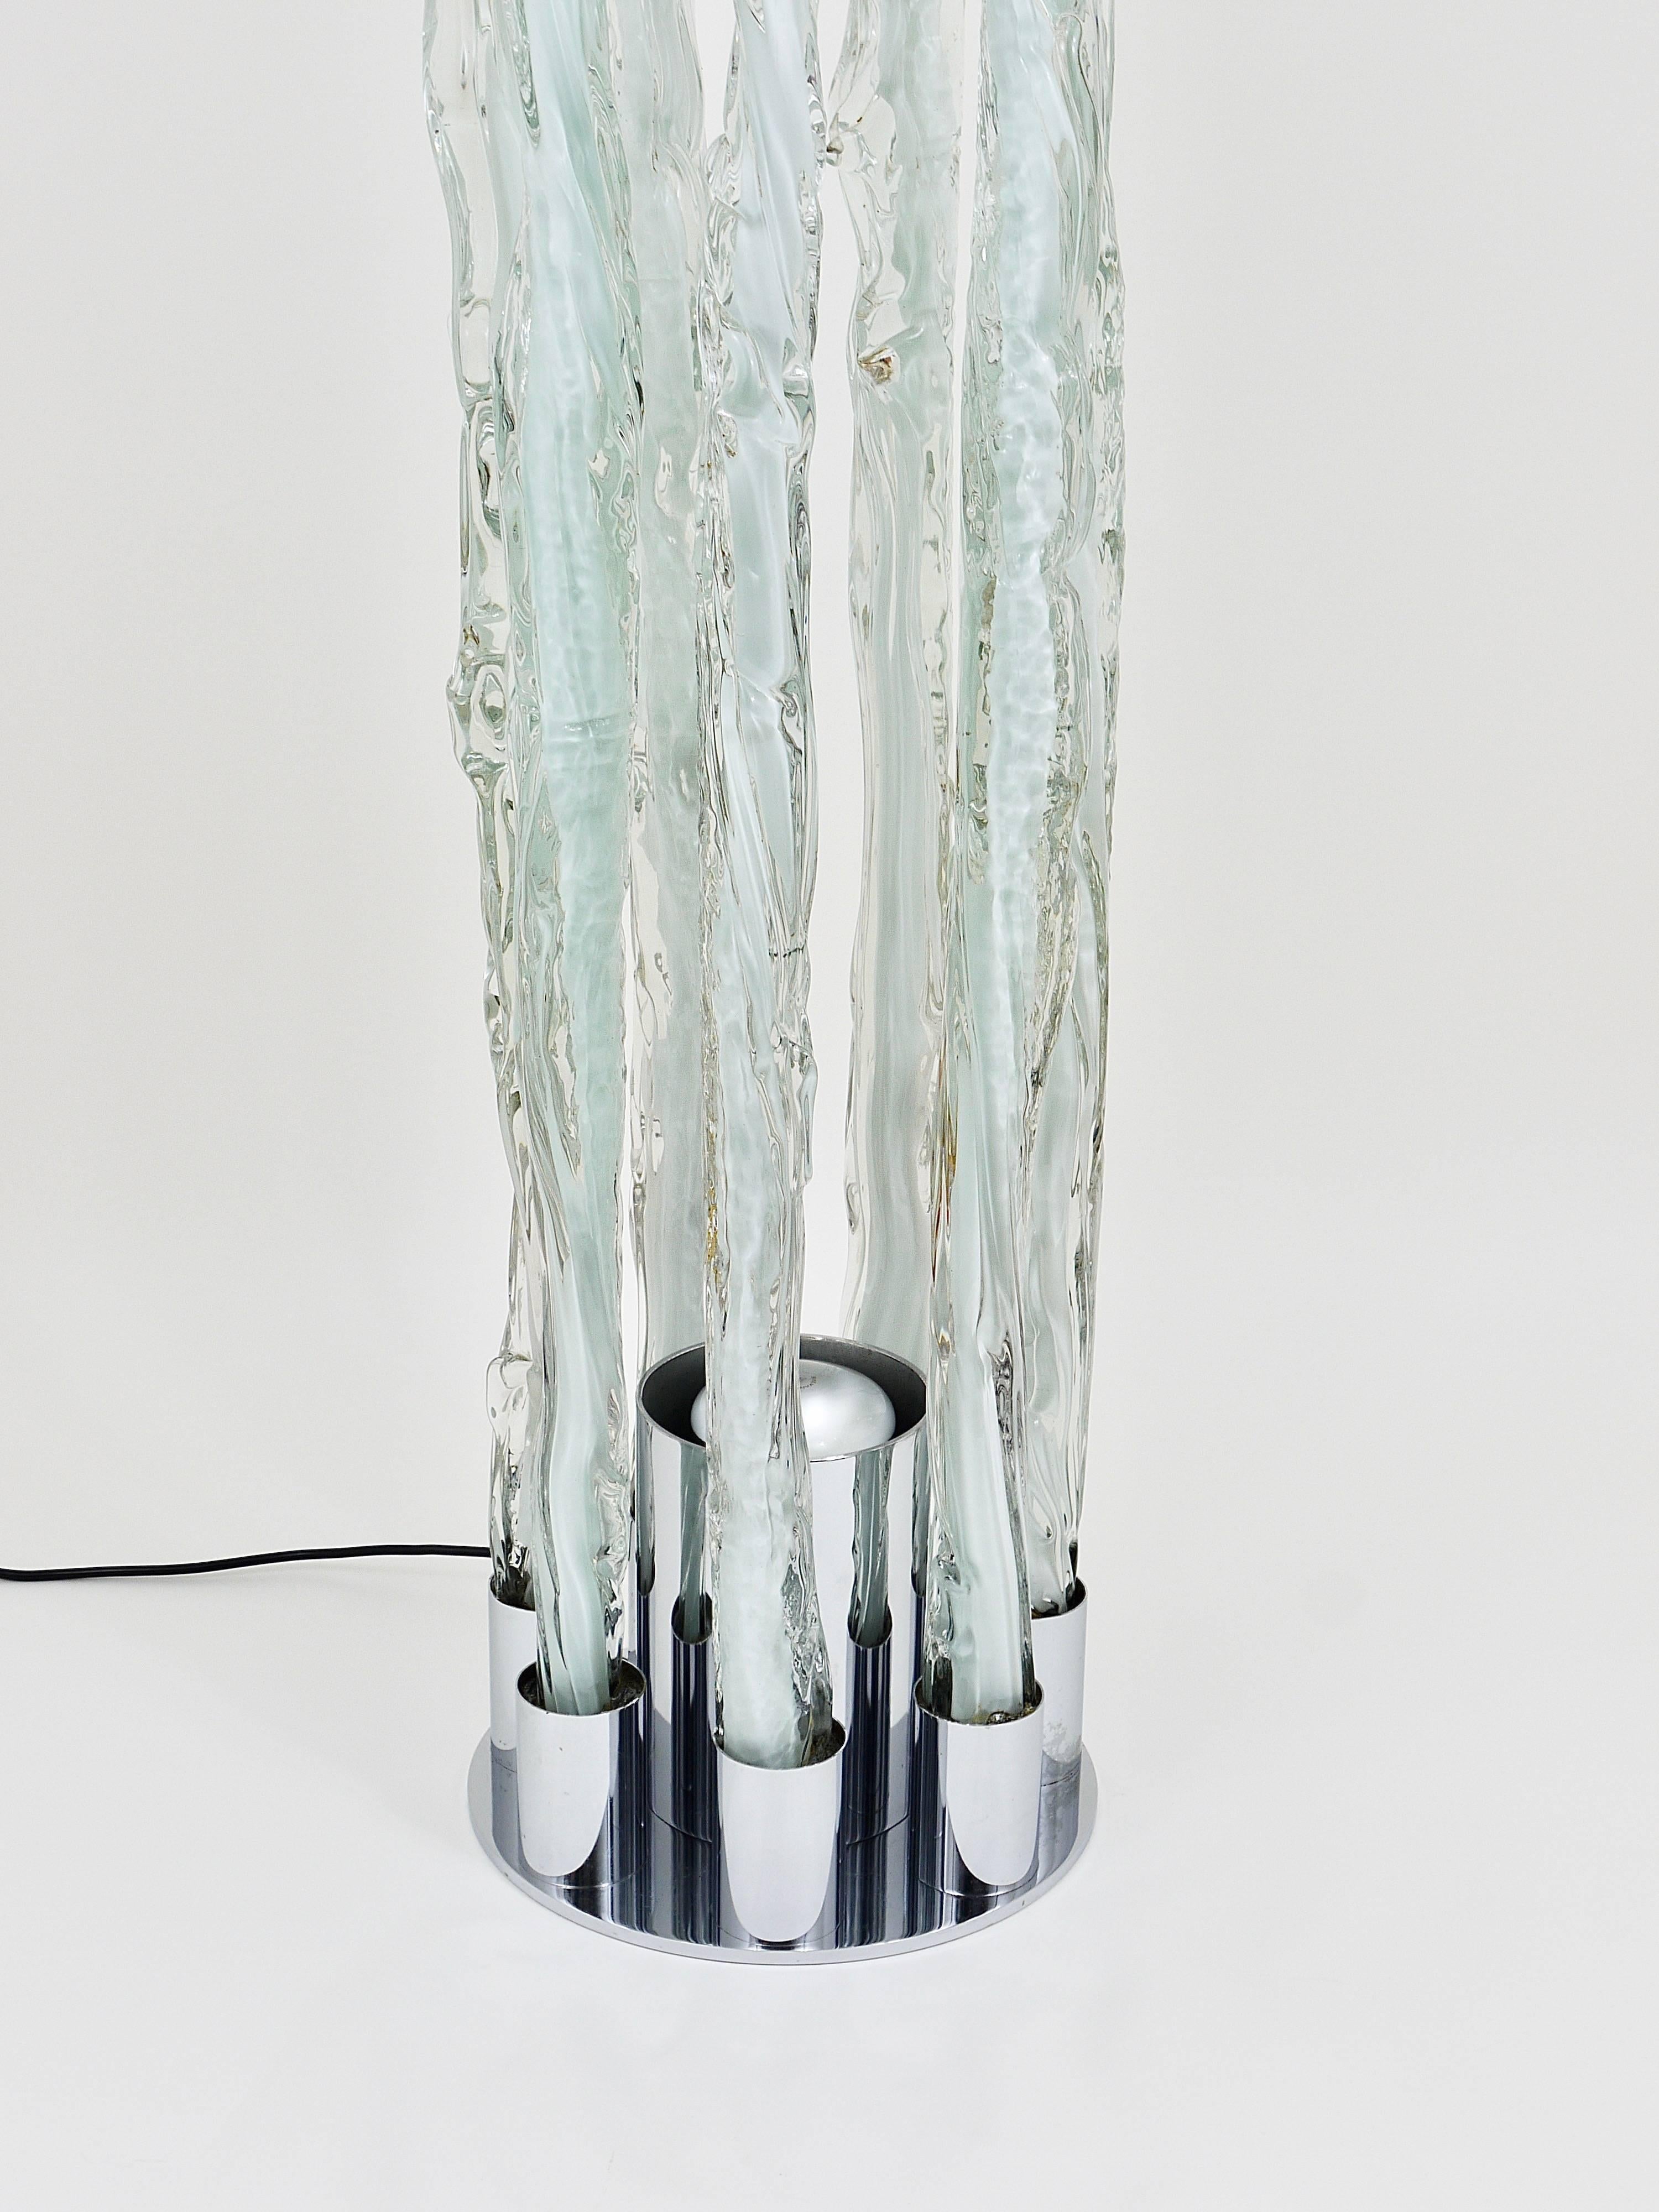 Metal Sculptural Ettore Fantasia Gino Poli Murano Glass Floor Lamp, Italy, 1960s For Sale